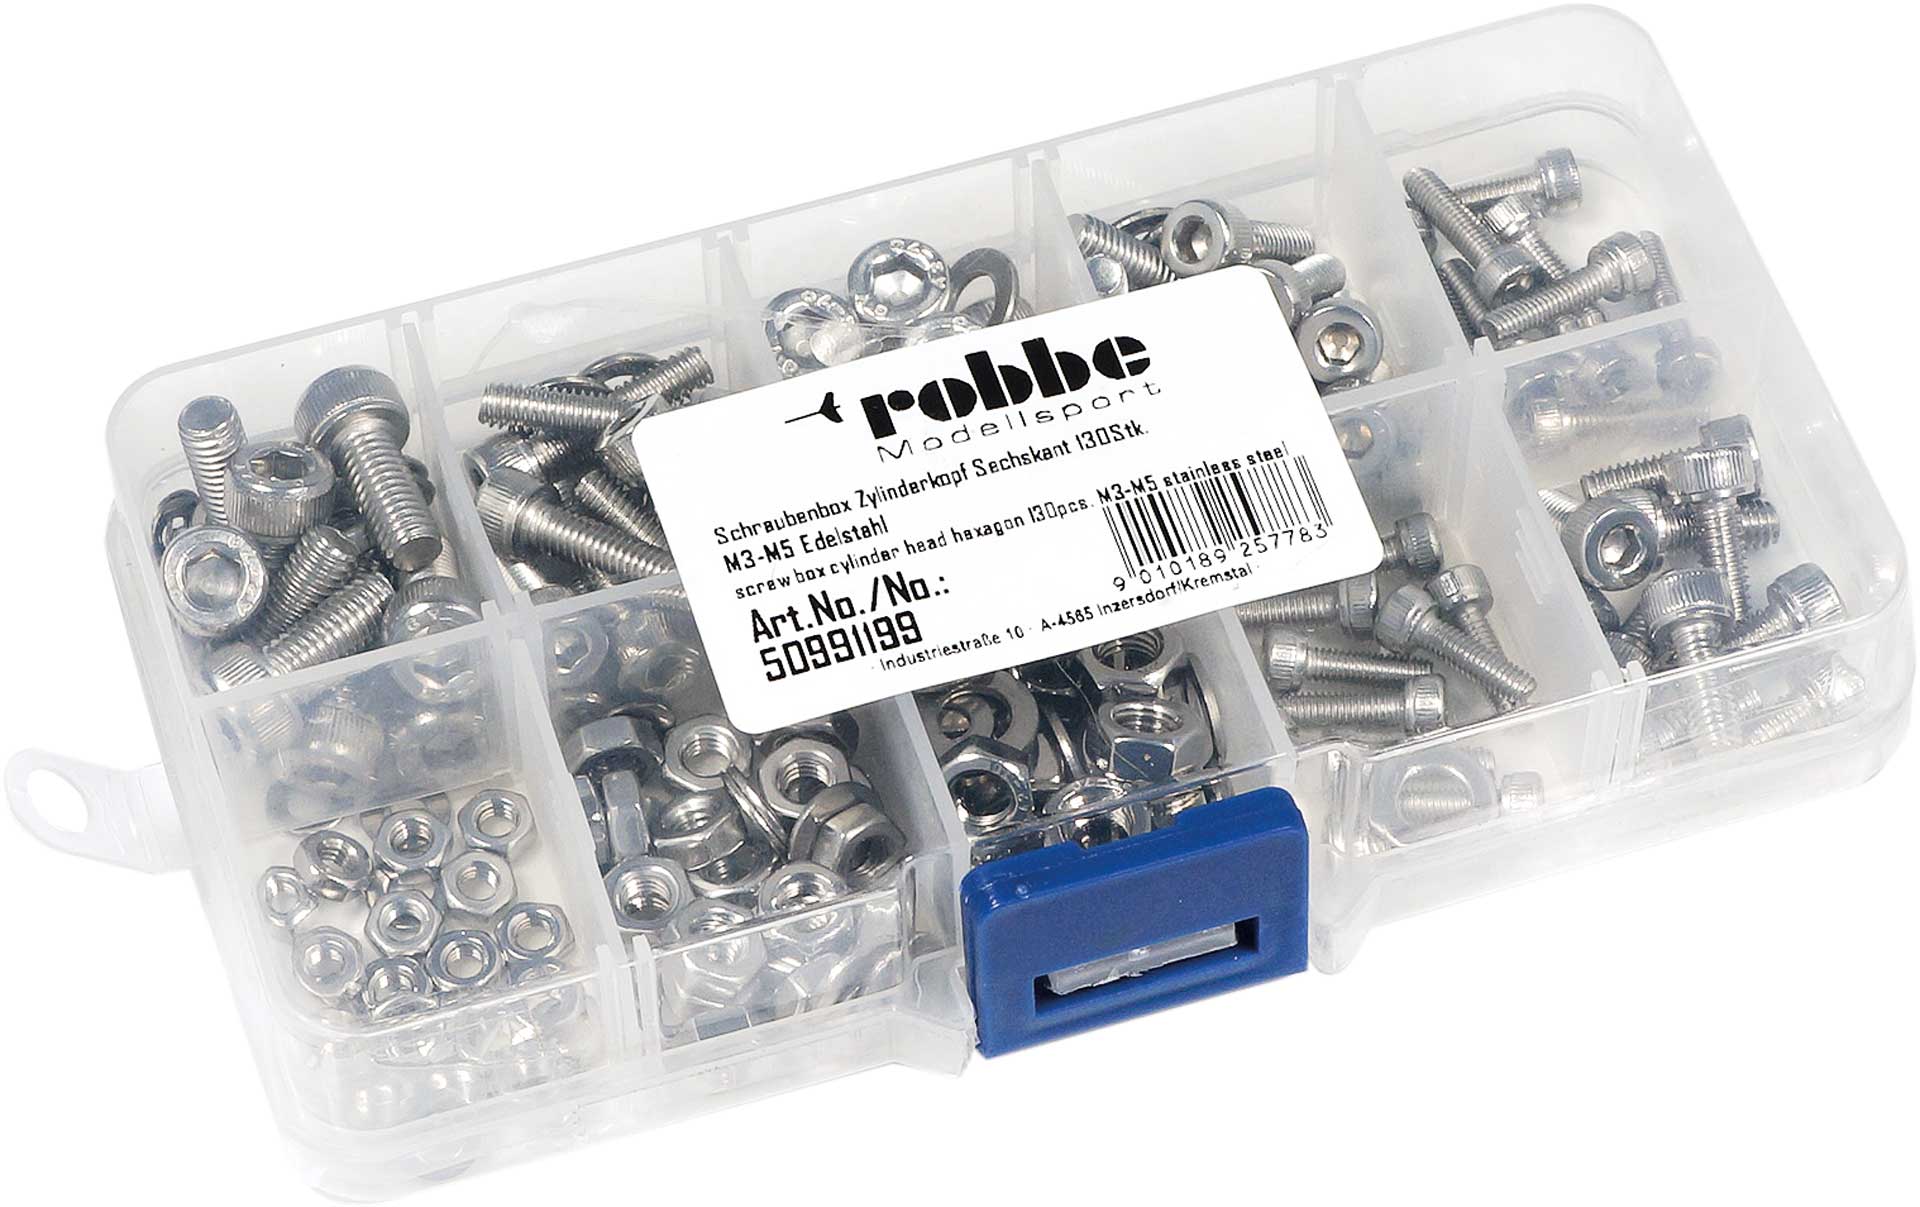 Robbe Modellsport Screw box hexagon socket head 130pcs M3-M5 stainless steel